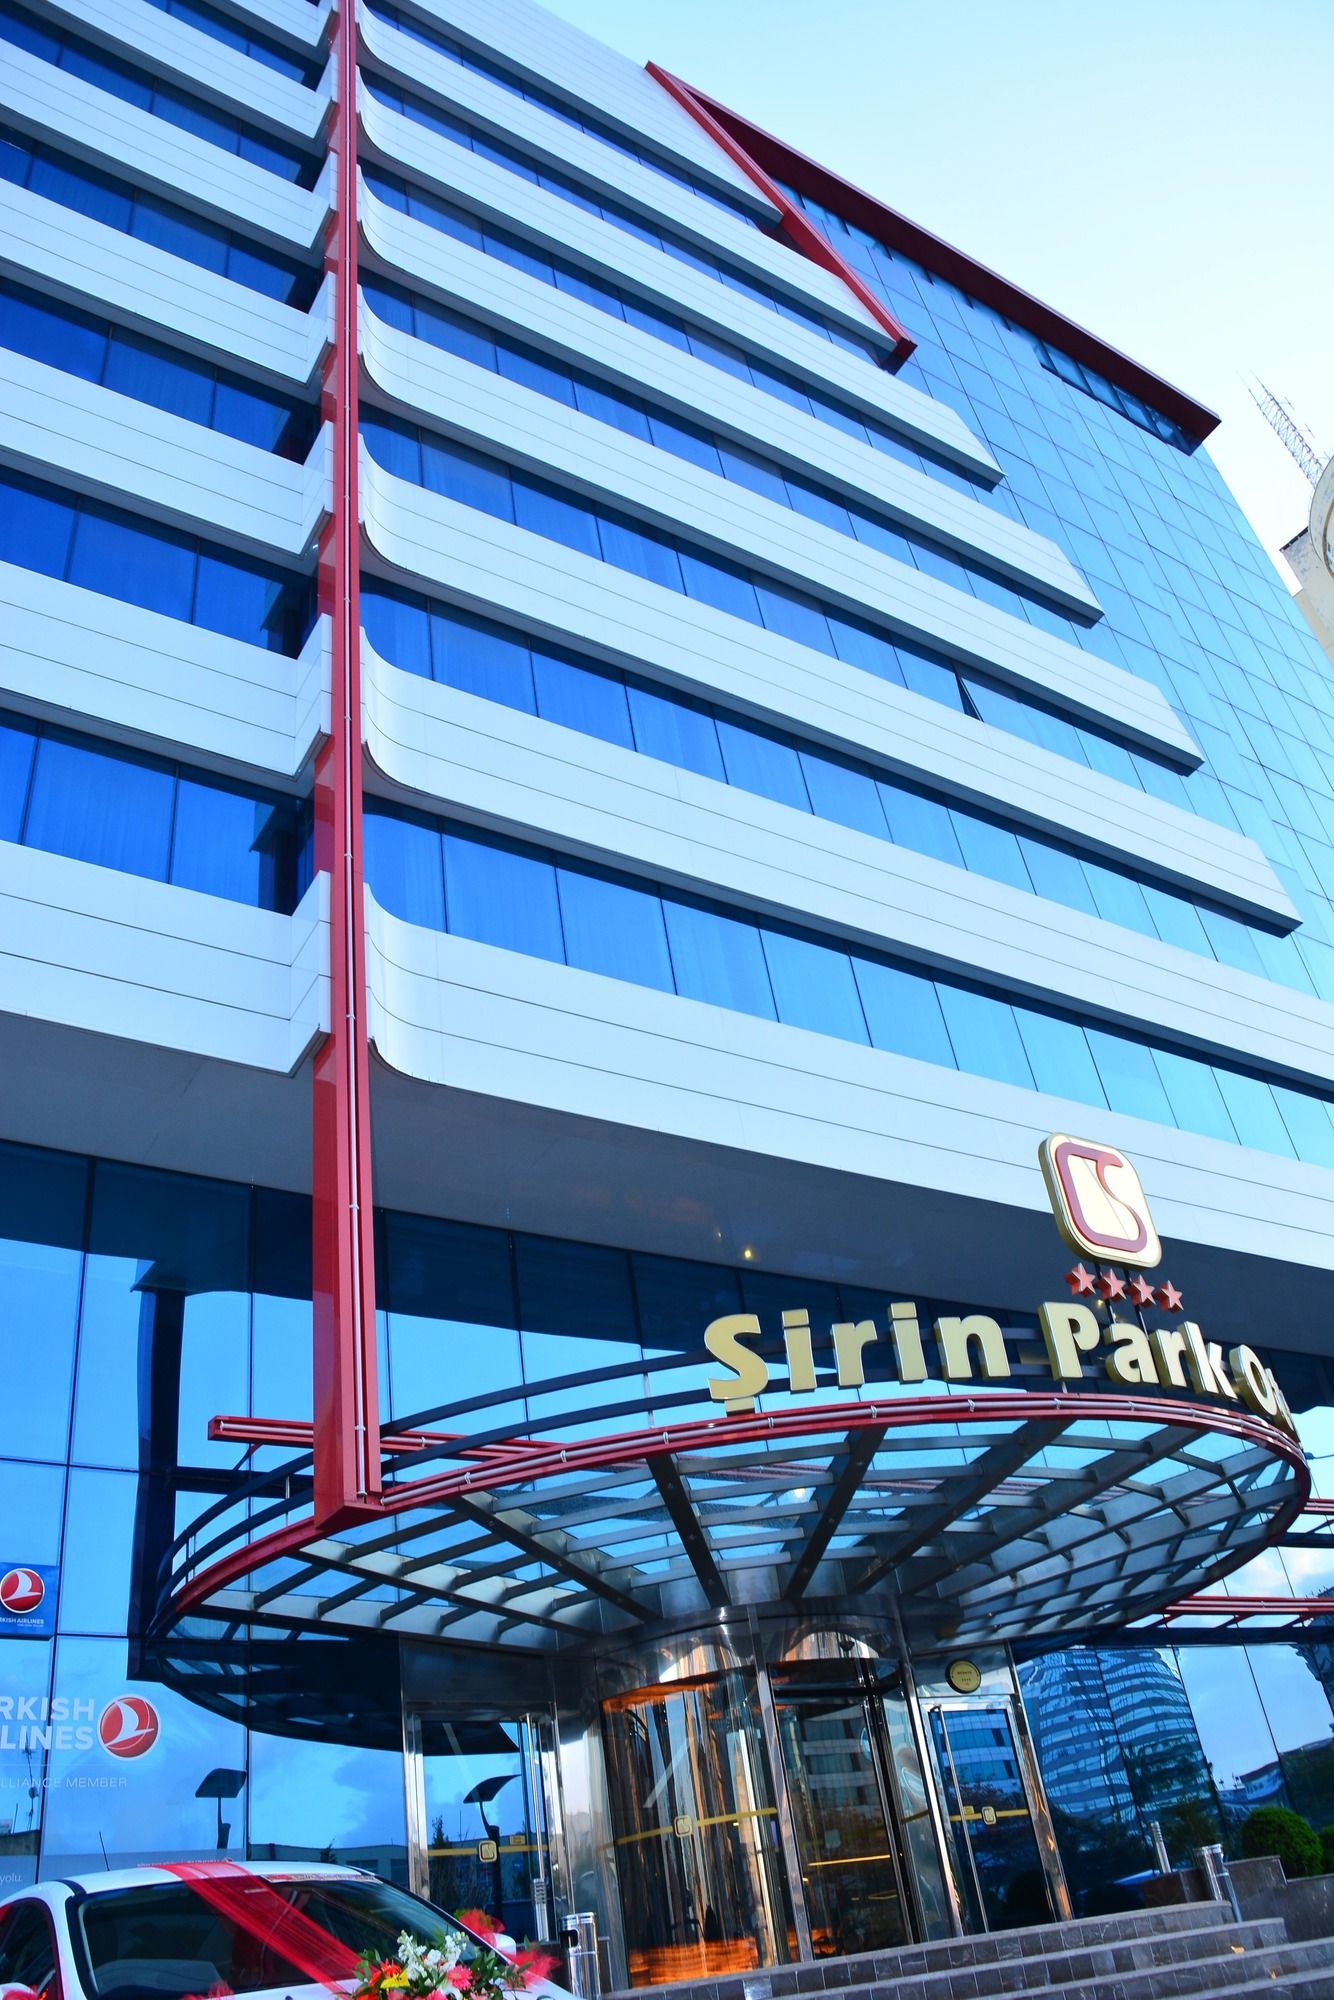 Sirin Park Hotel